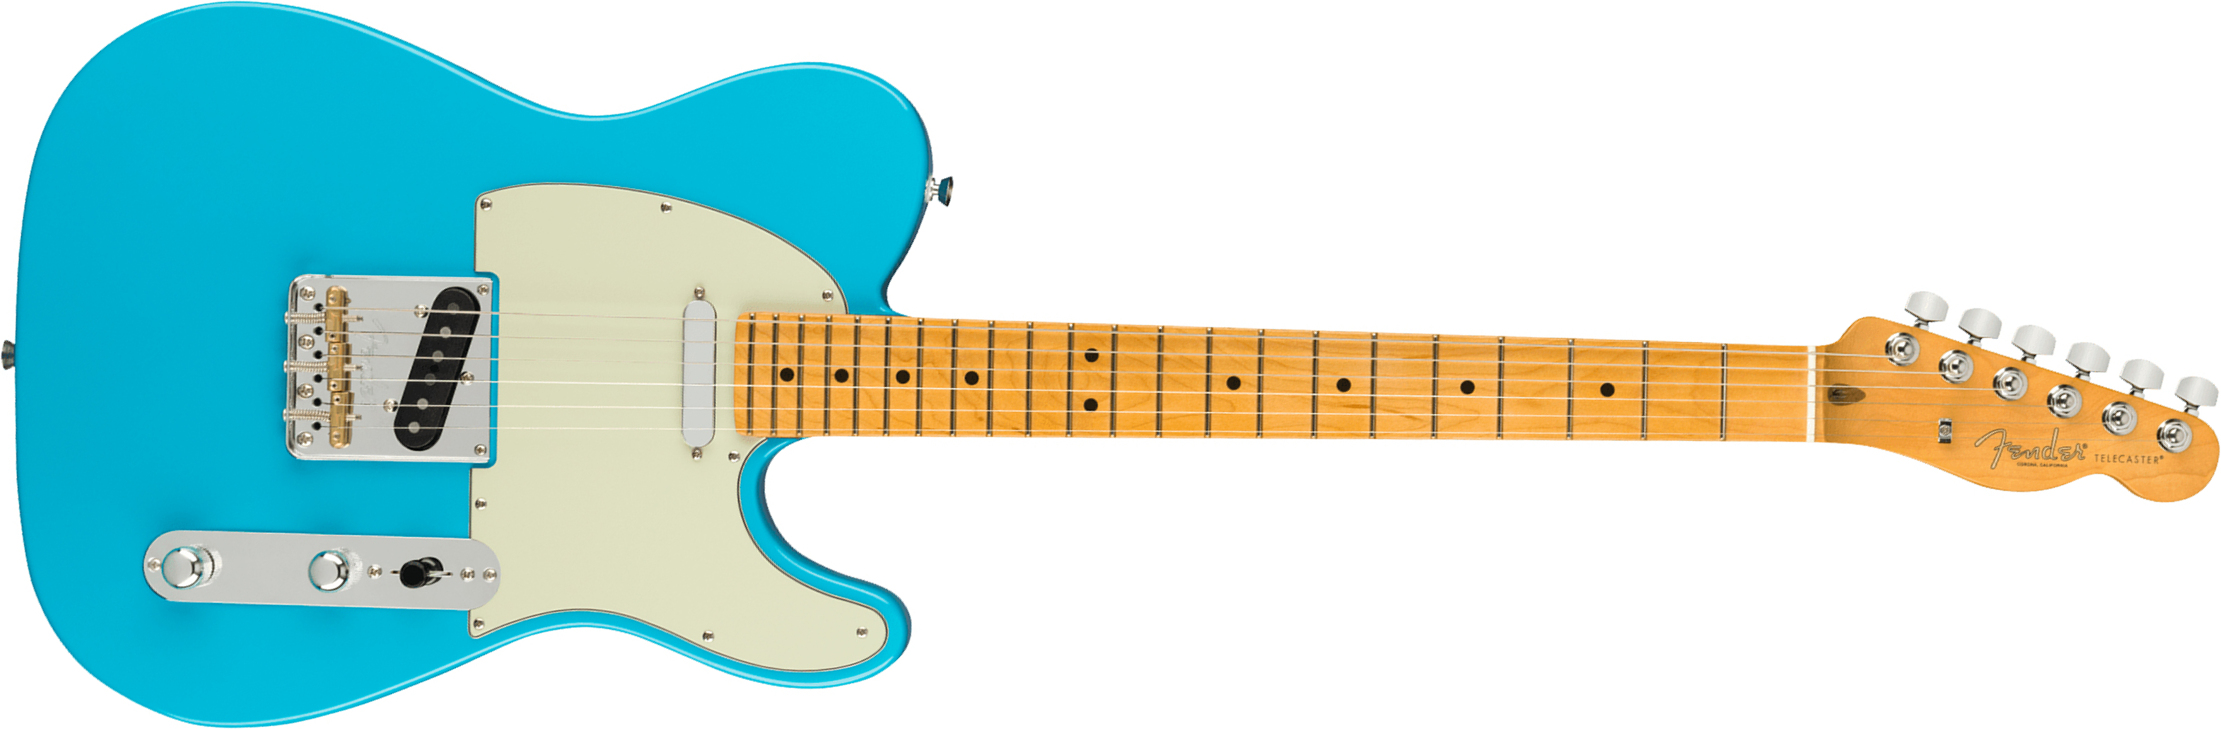 Fender Tele American Professional Ii Usa Mn - Miami Blue - Tel shape electric guitar - Main picture